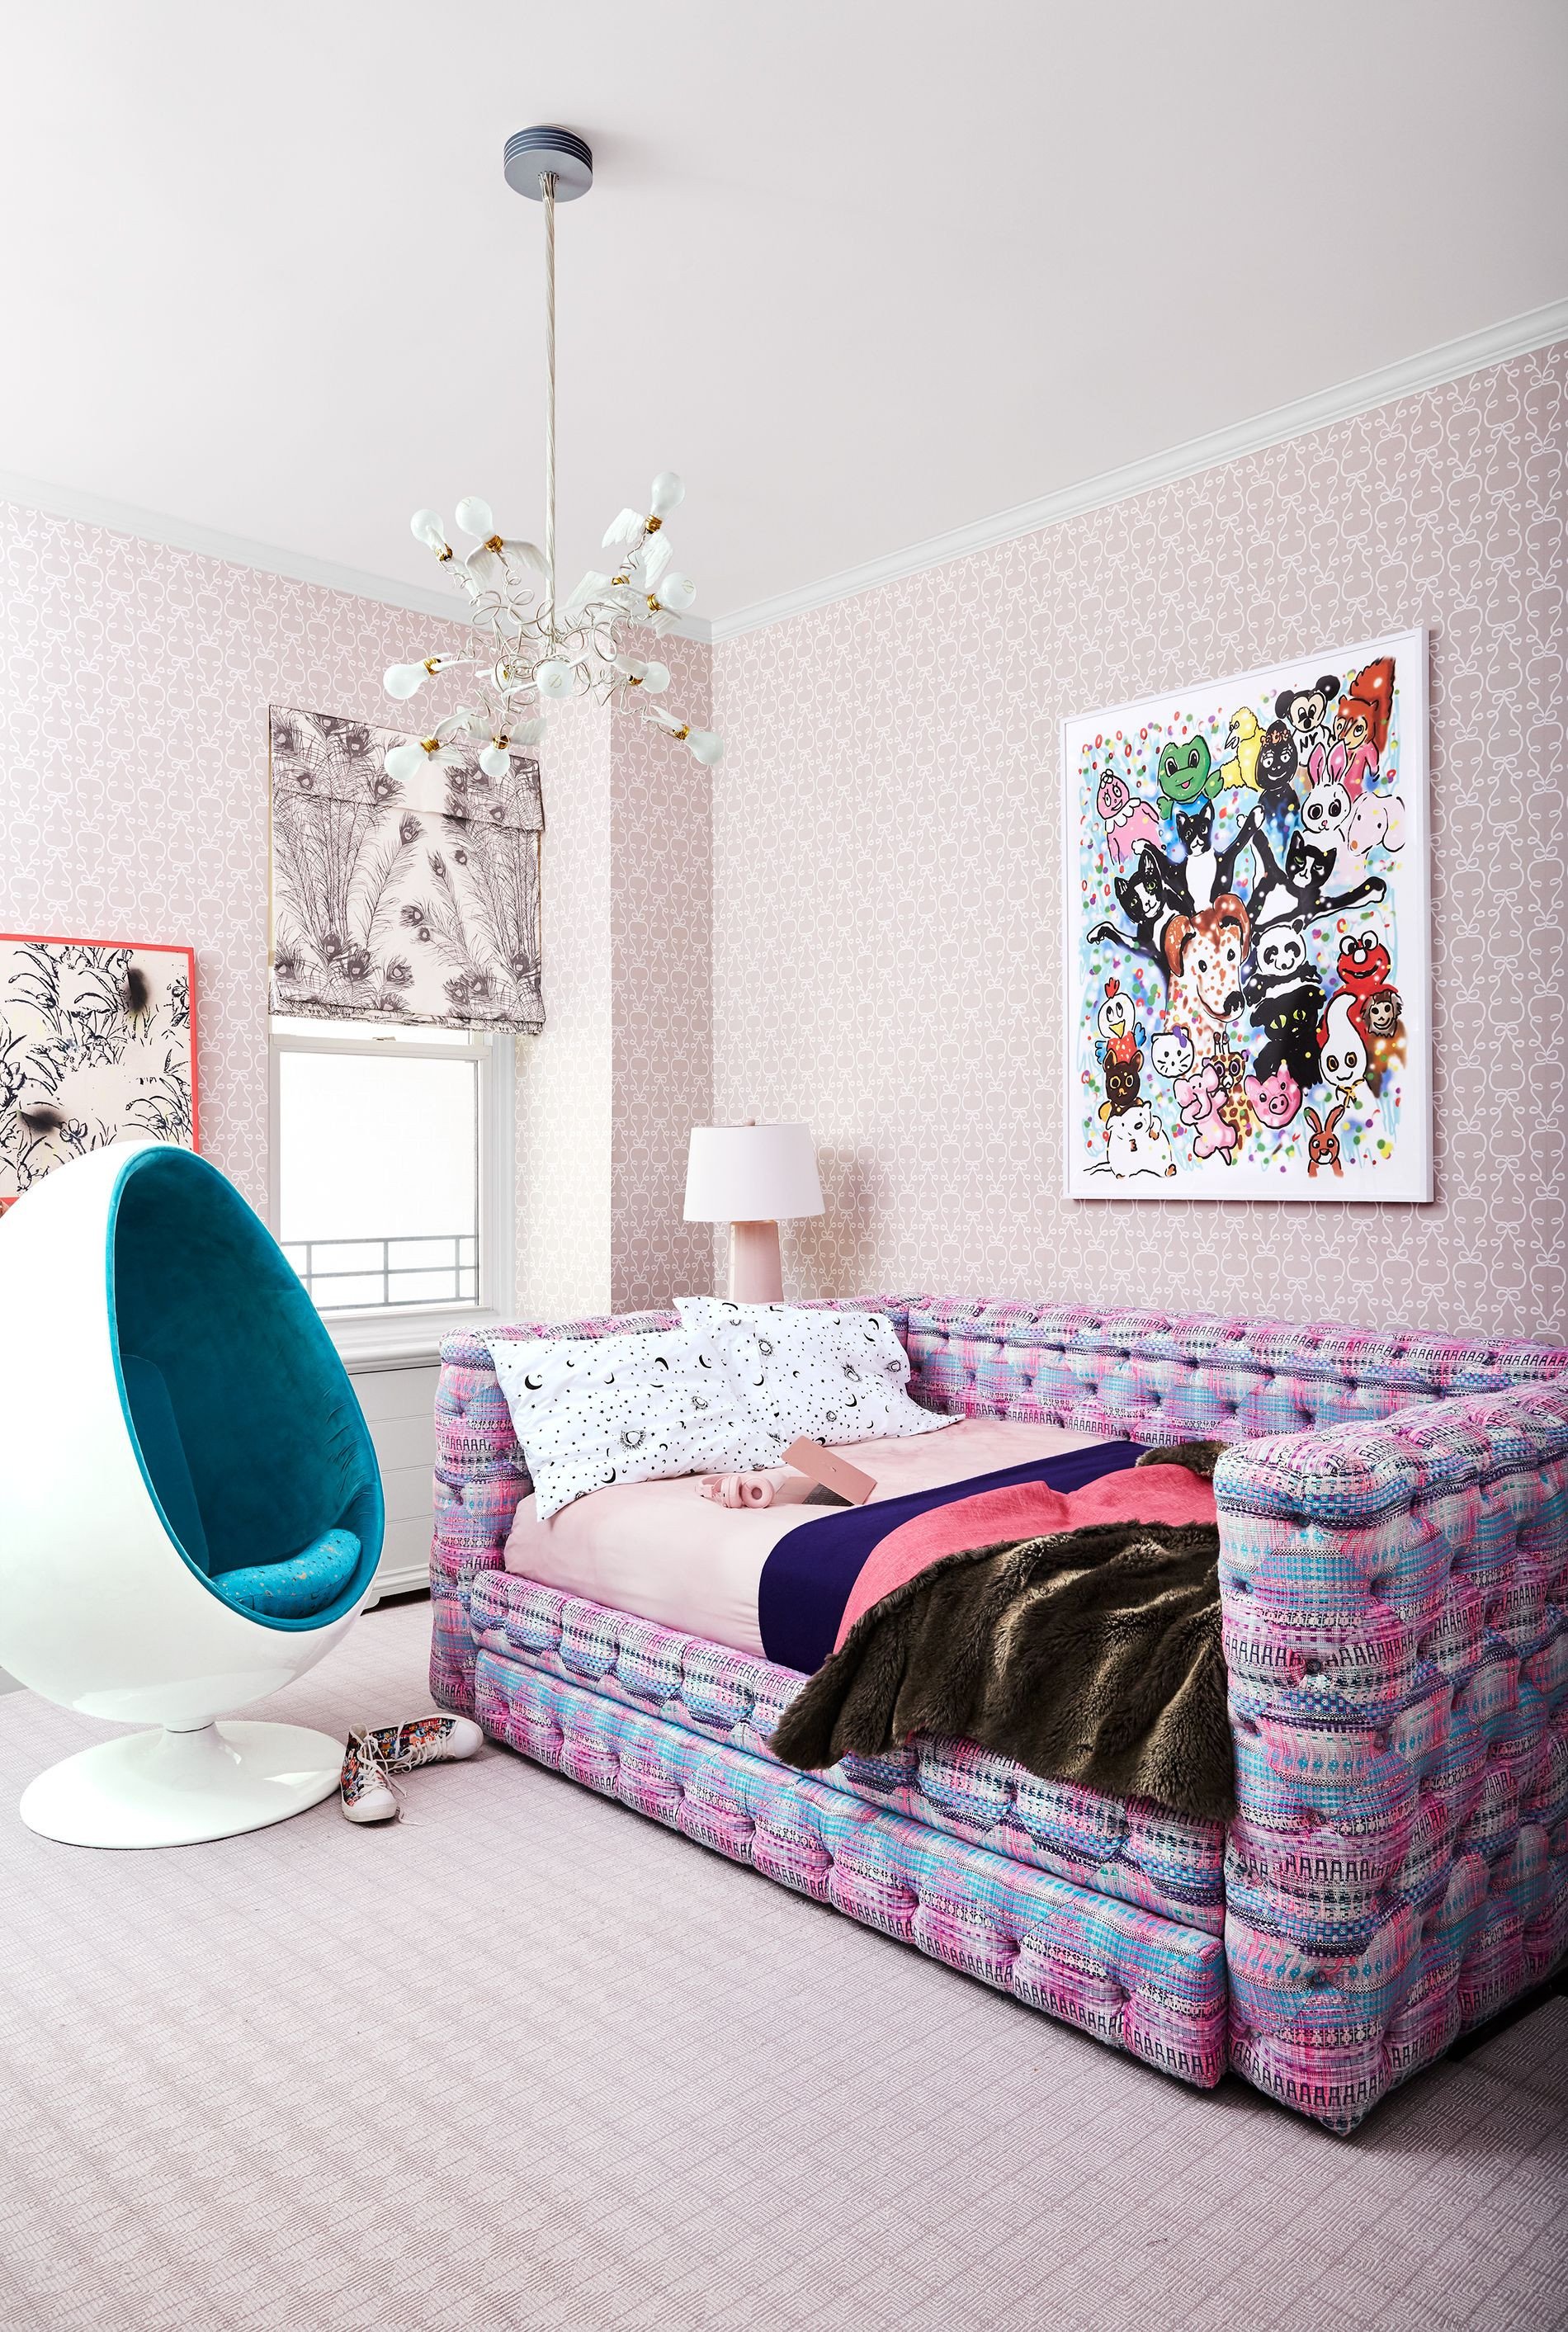 Grey and Turquoise Bedroom Ideas Elegant 55 Kids Room Design Ideas Cool Kids Bedroom Decor and Style